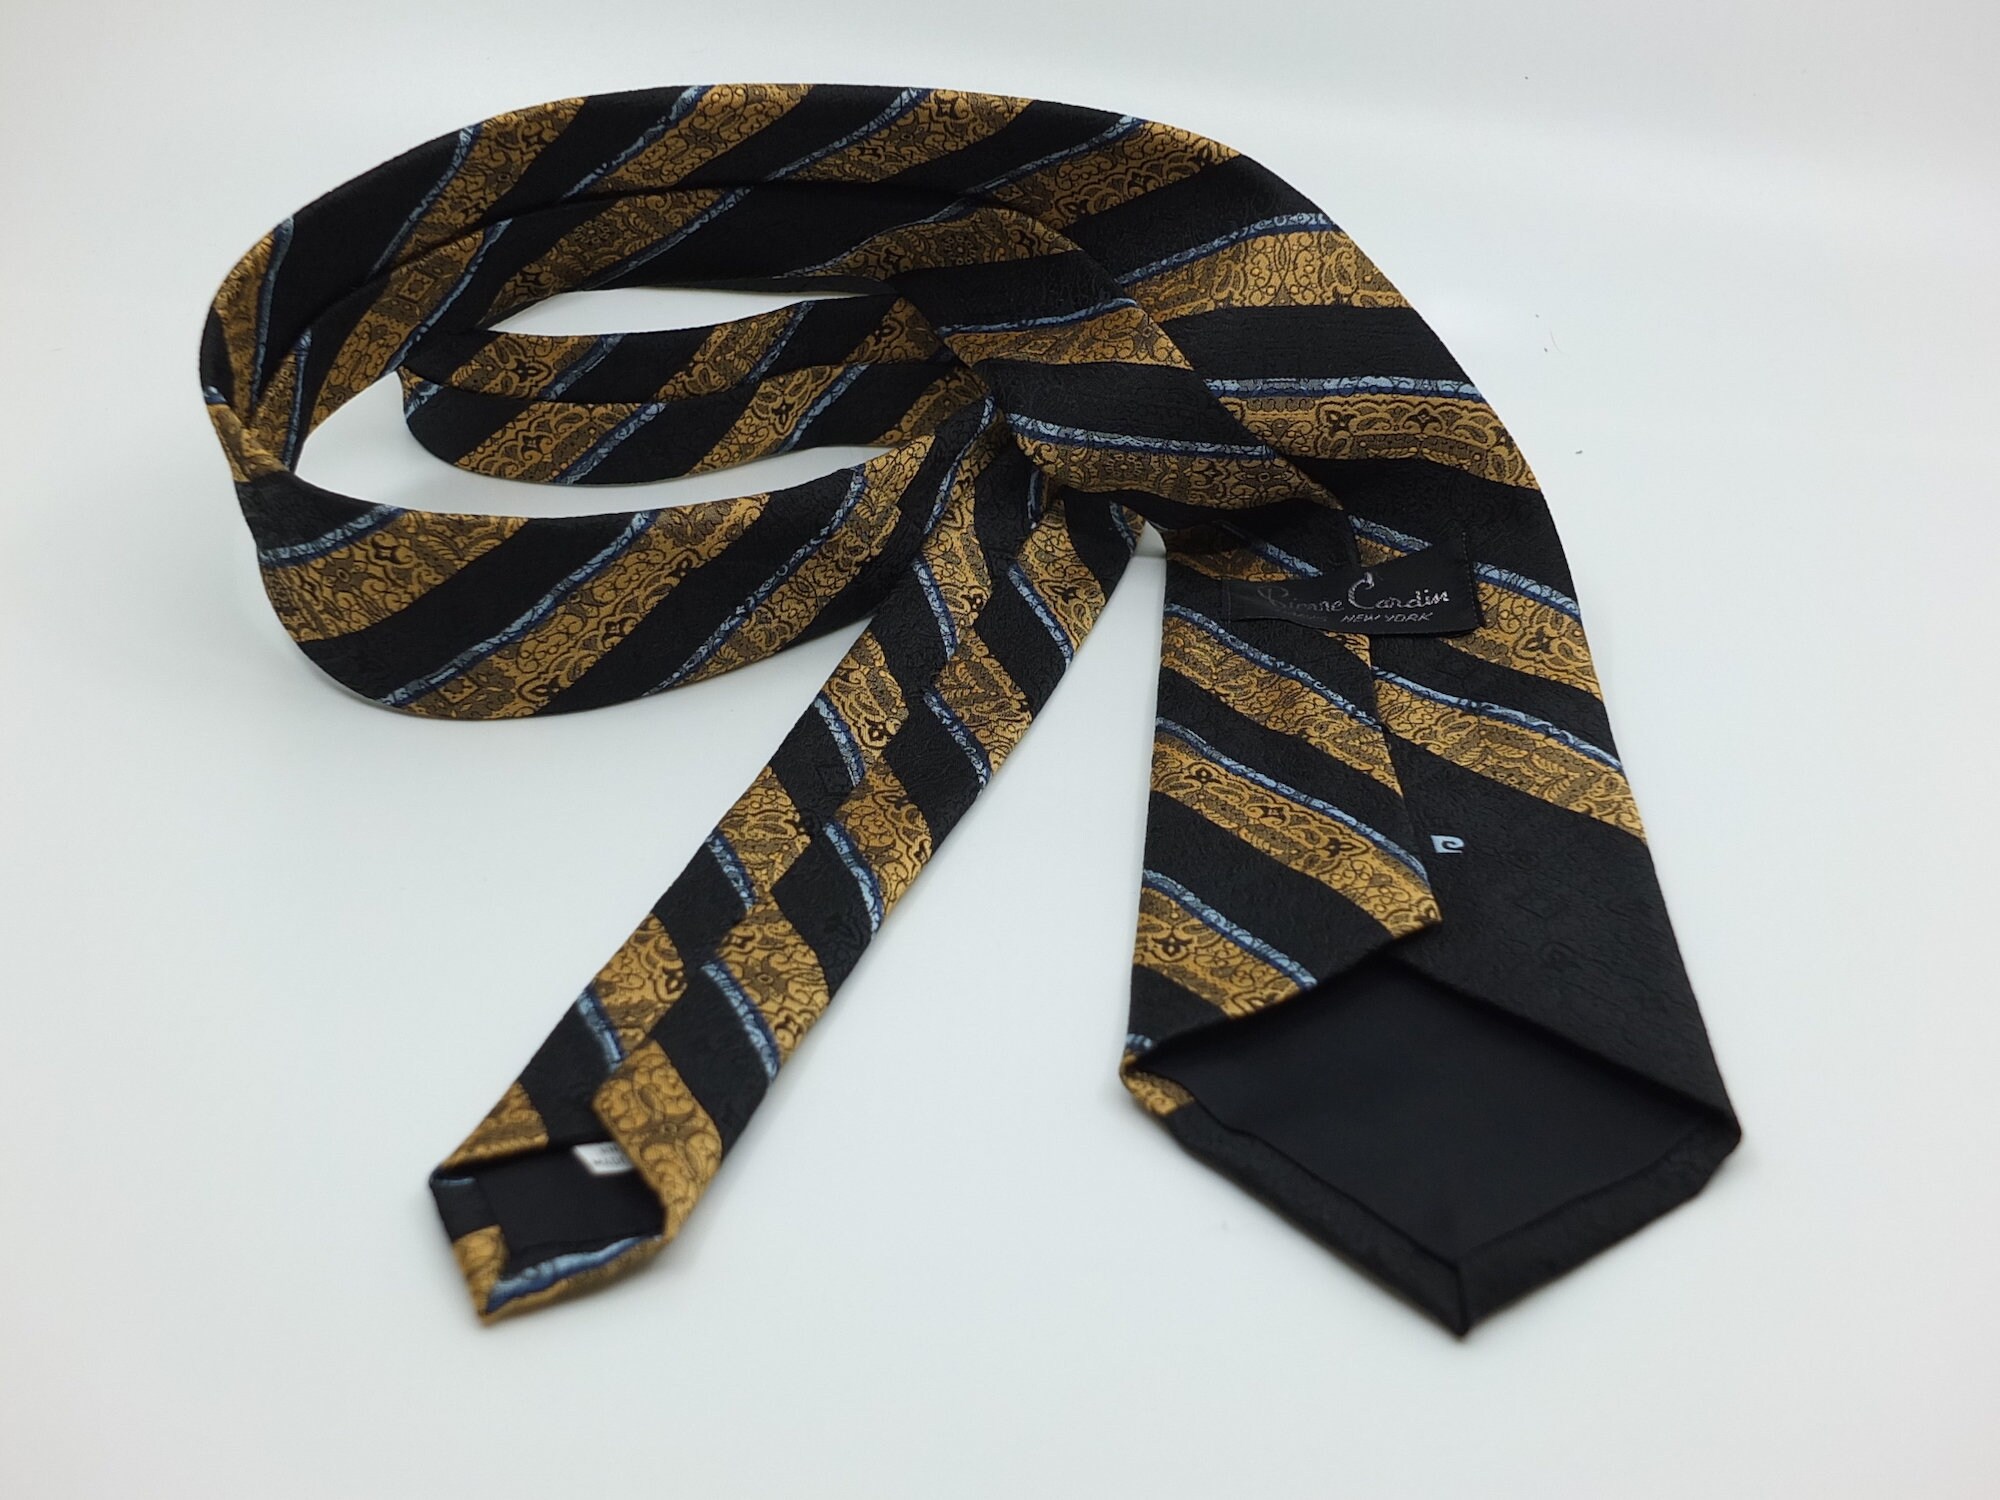 DESIGNER Pierre Cardin Logo Vintage Necktie 1970s Tie - Etsy